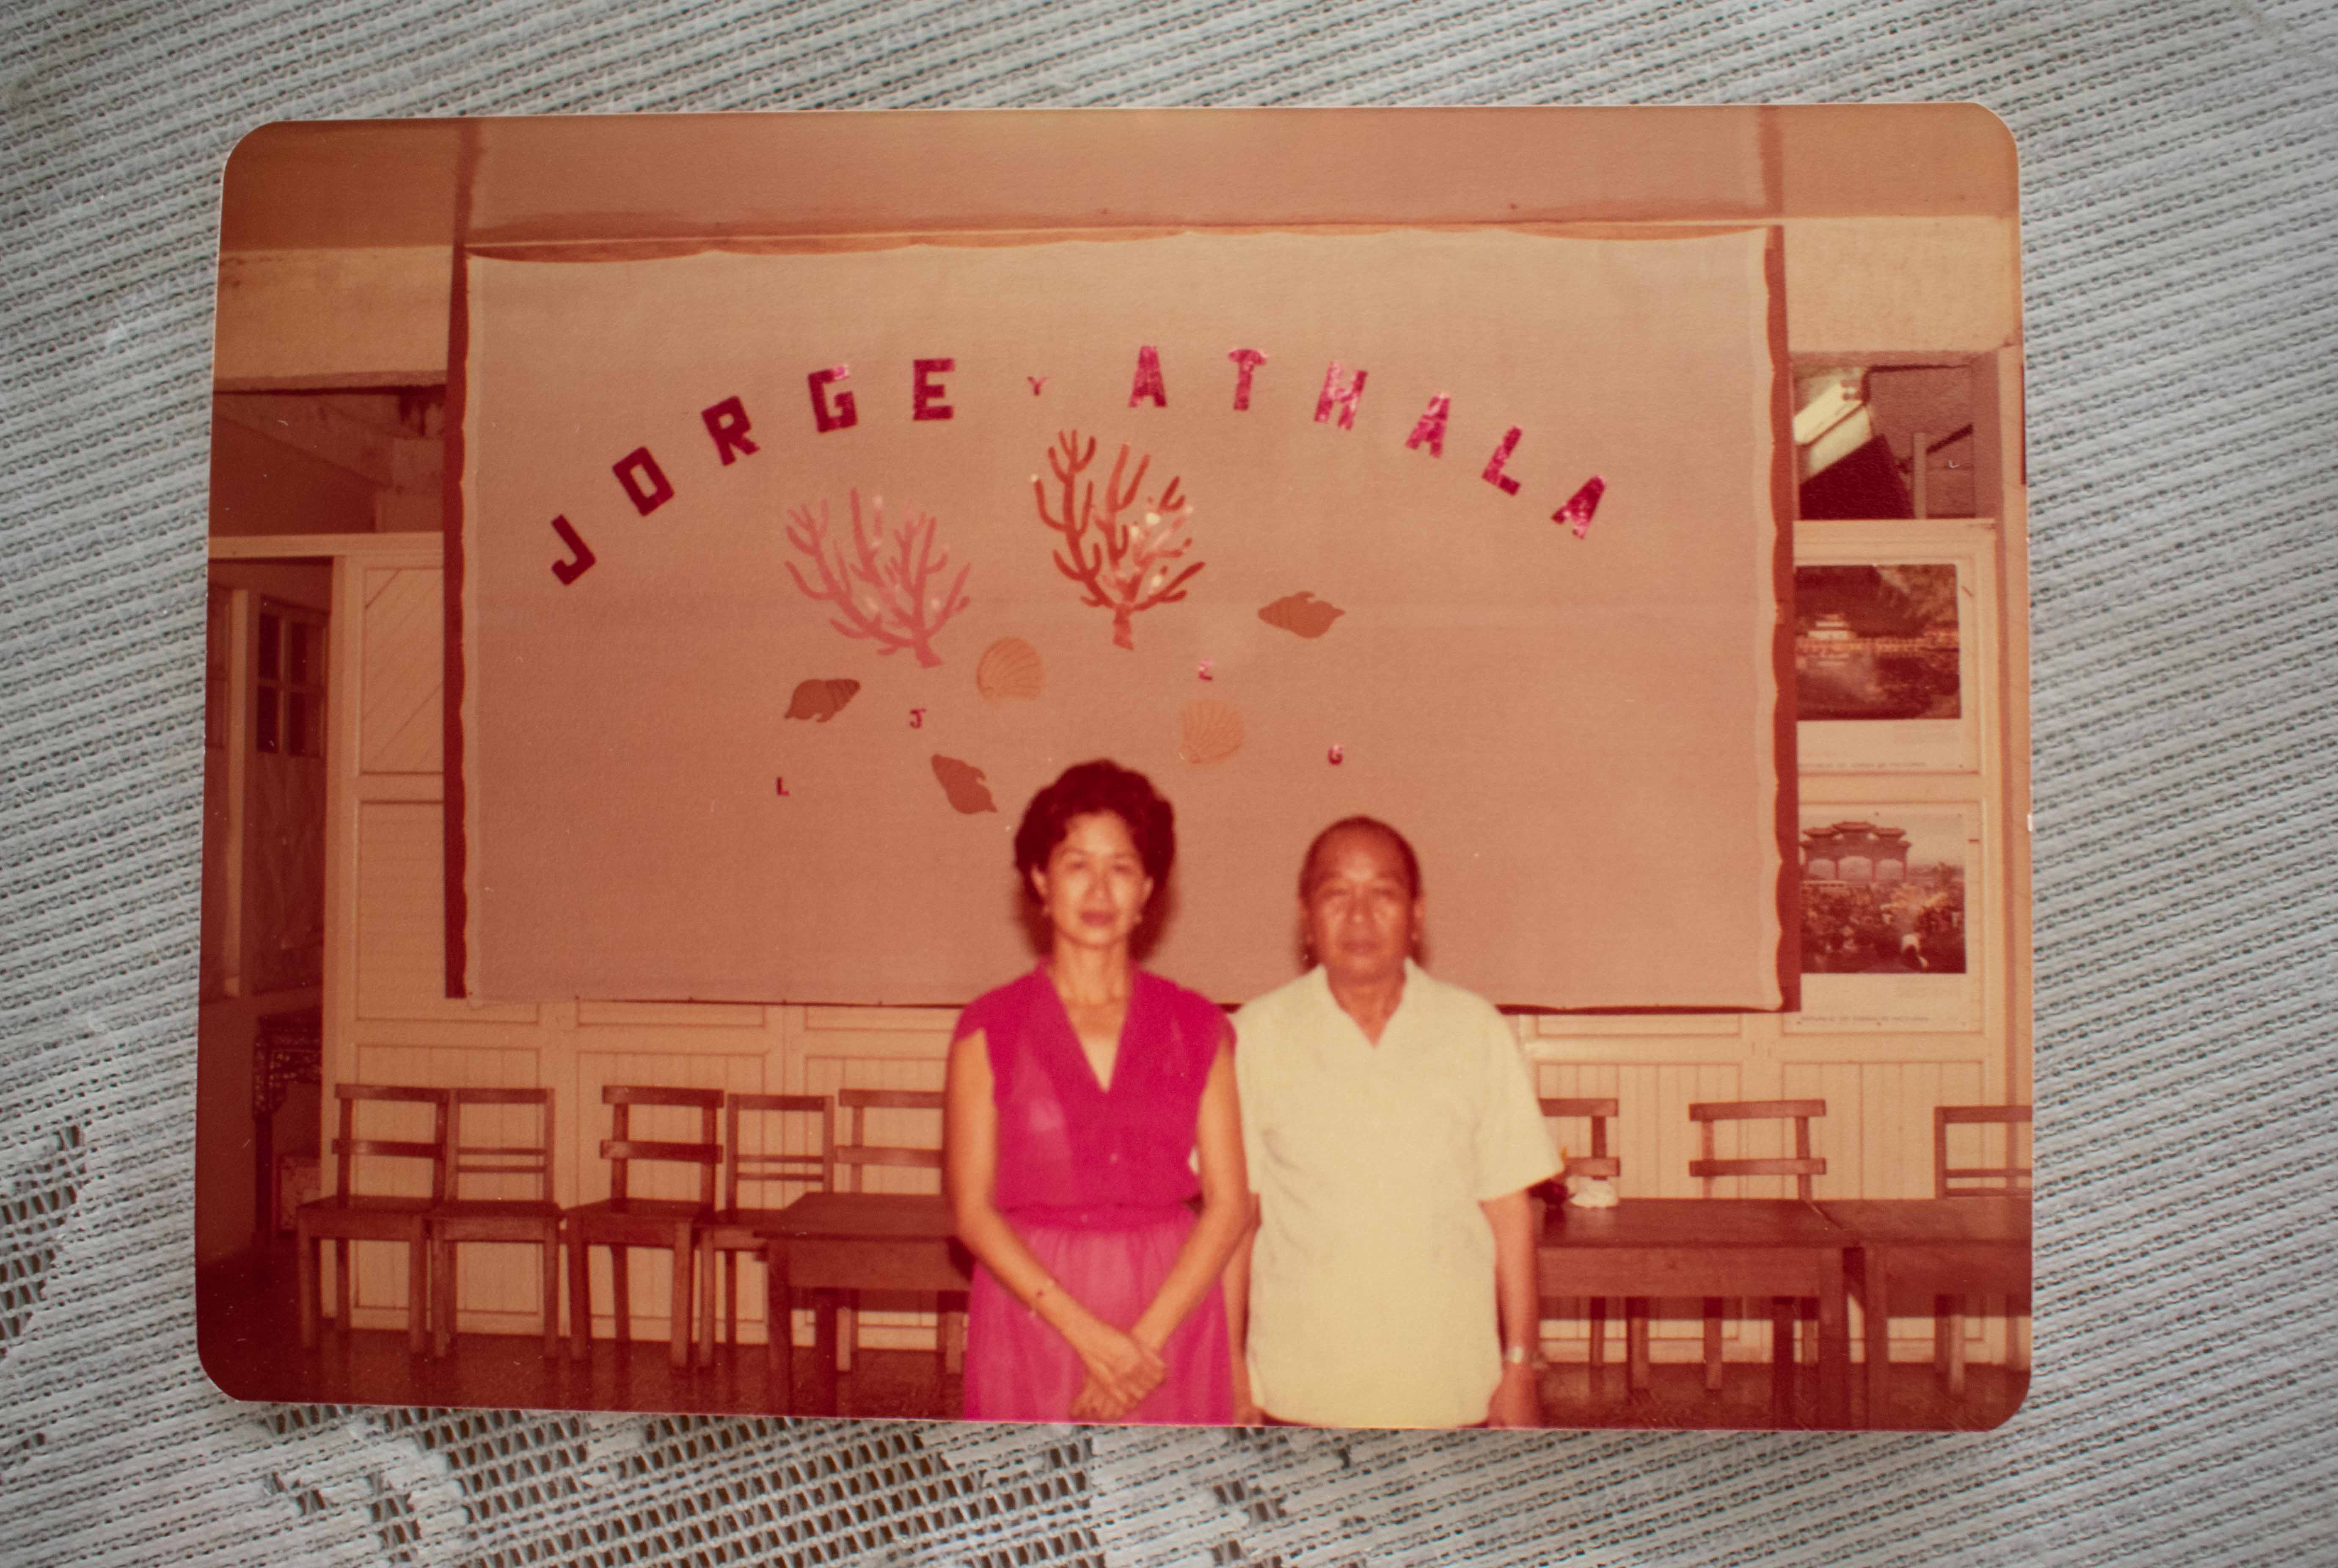 4.athala Li Chen And Jorge Acón’s Wedding Anniversary At The Asociación, Date Unknown